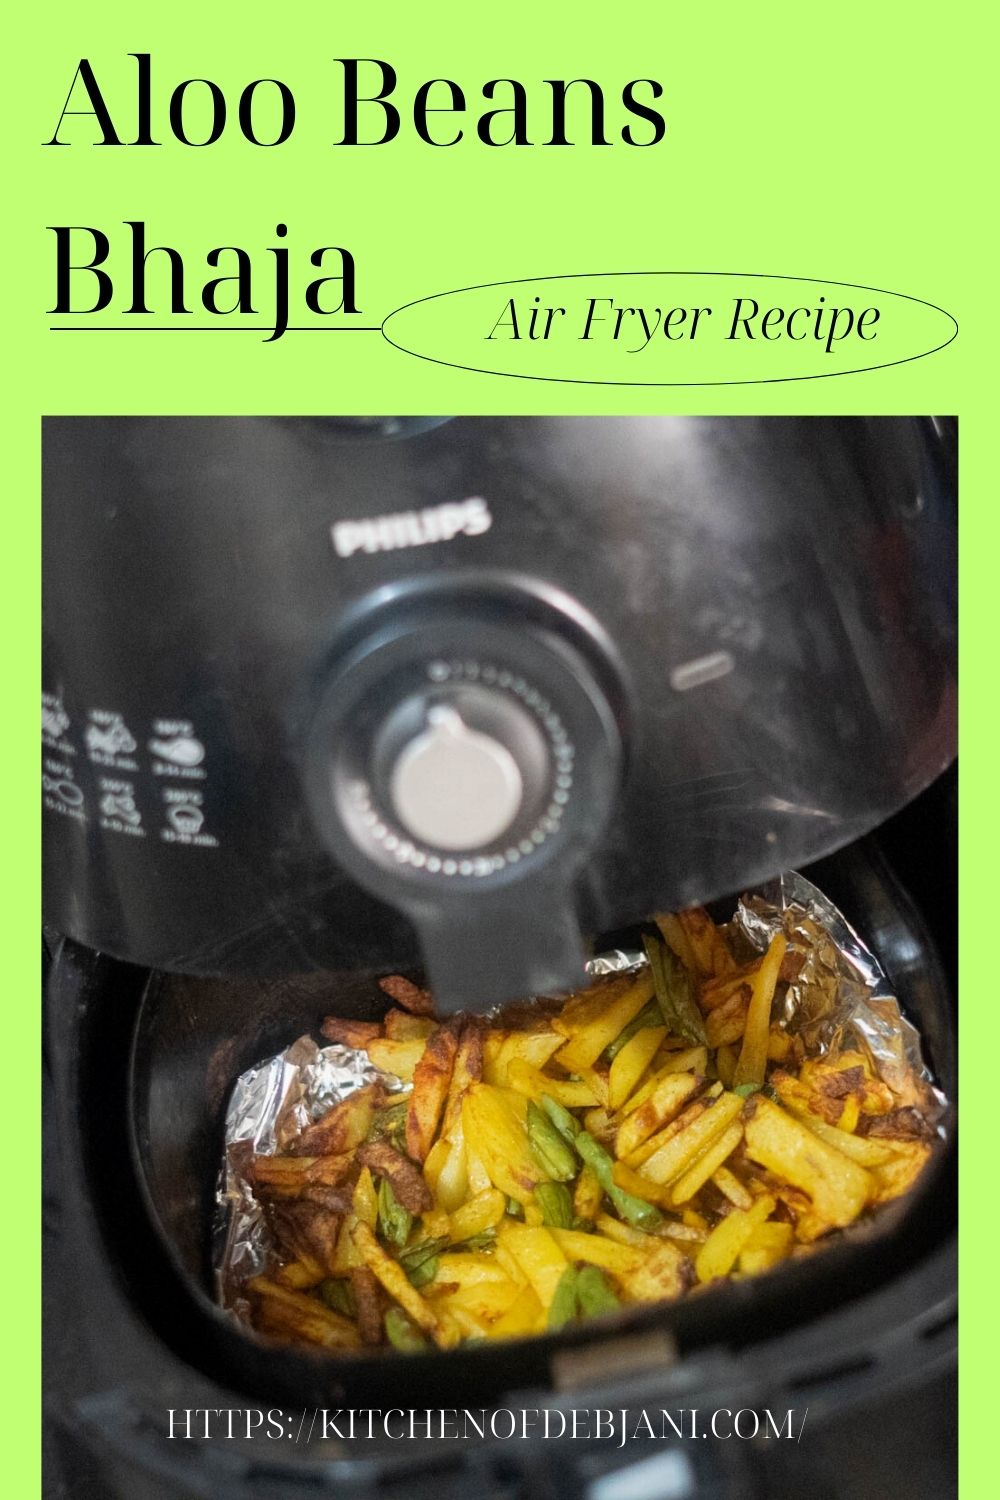 %Indian veg air fryer recipe aloo beans sabzi Recipe Food Pinterest Pin